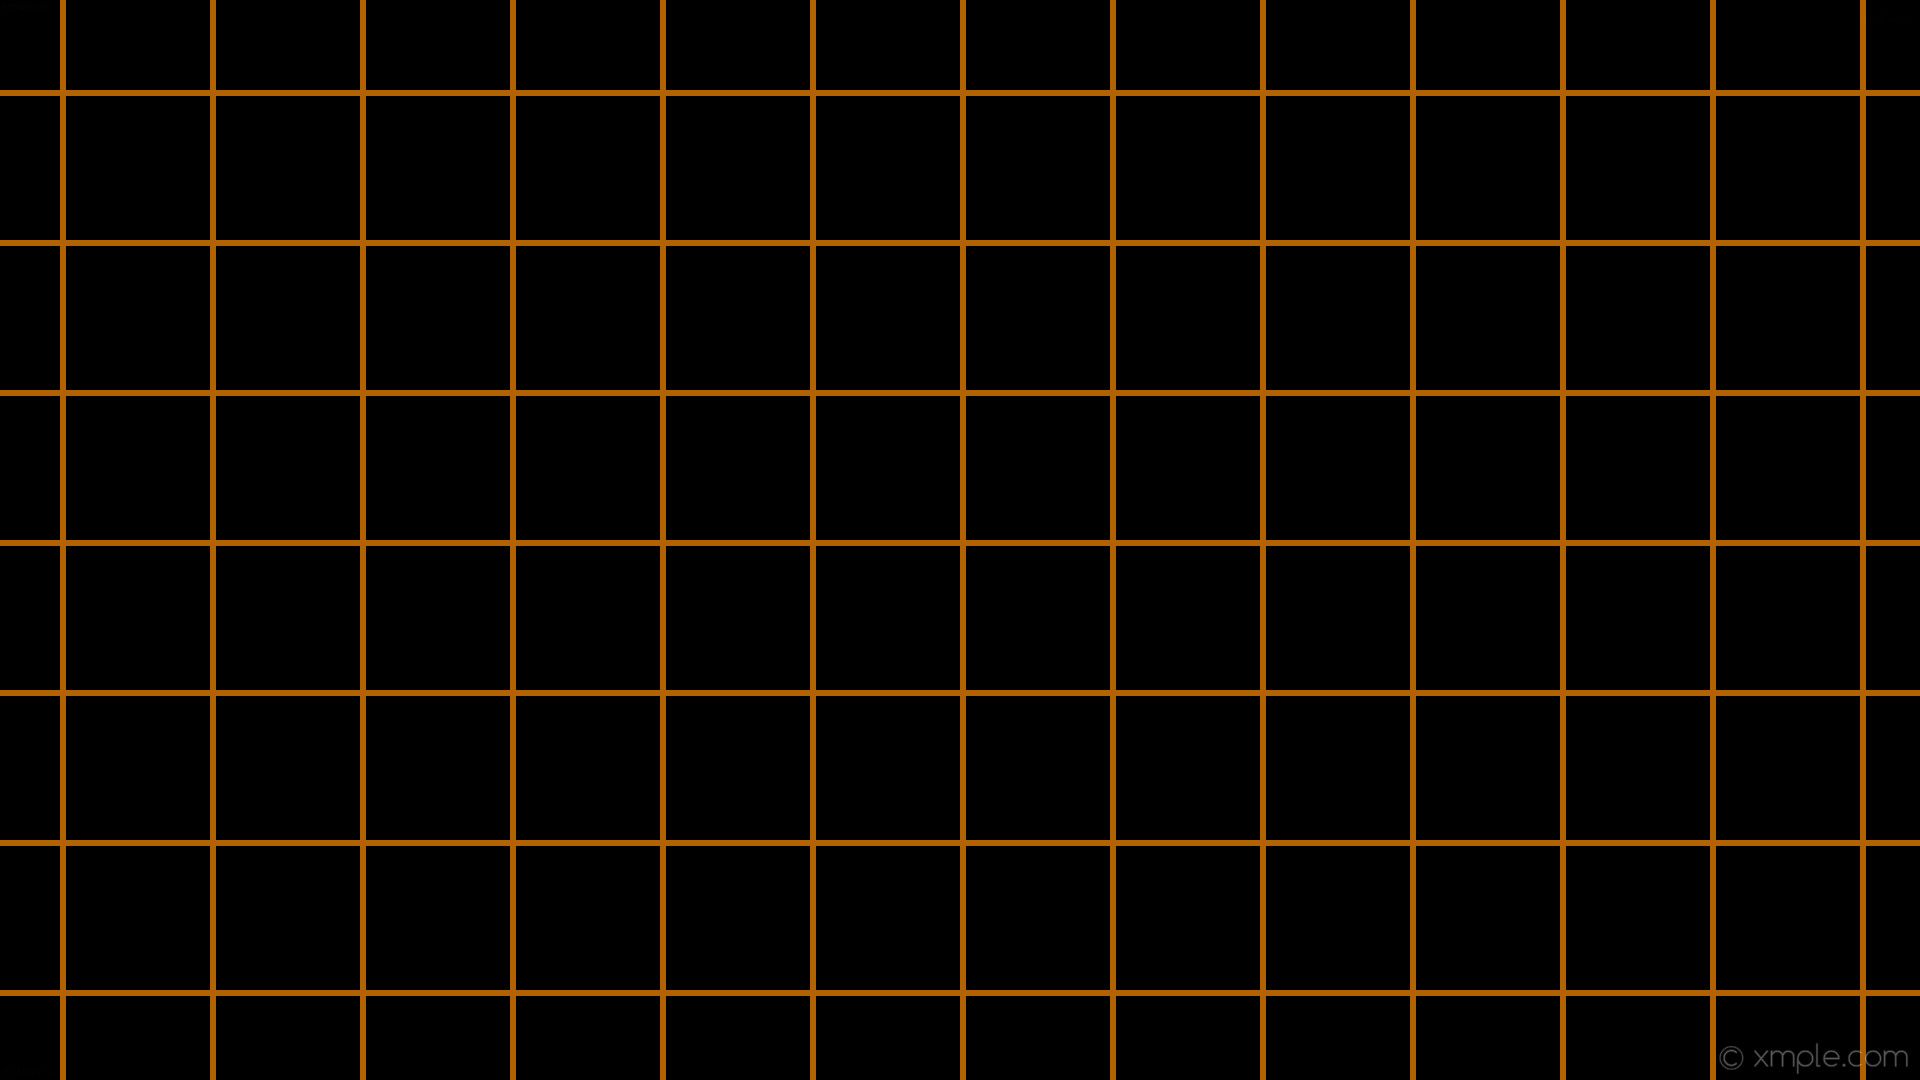 Orange grid lines on a black background - Grid, dark orange